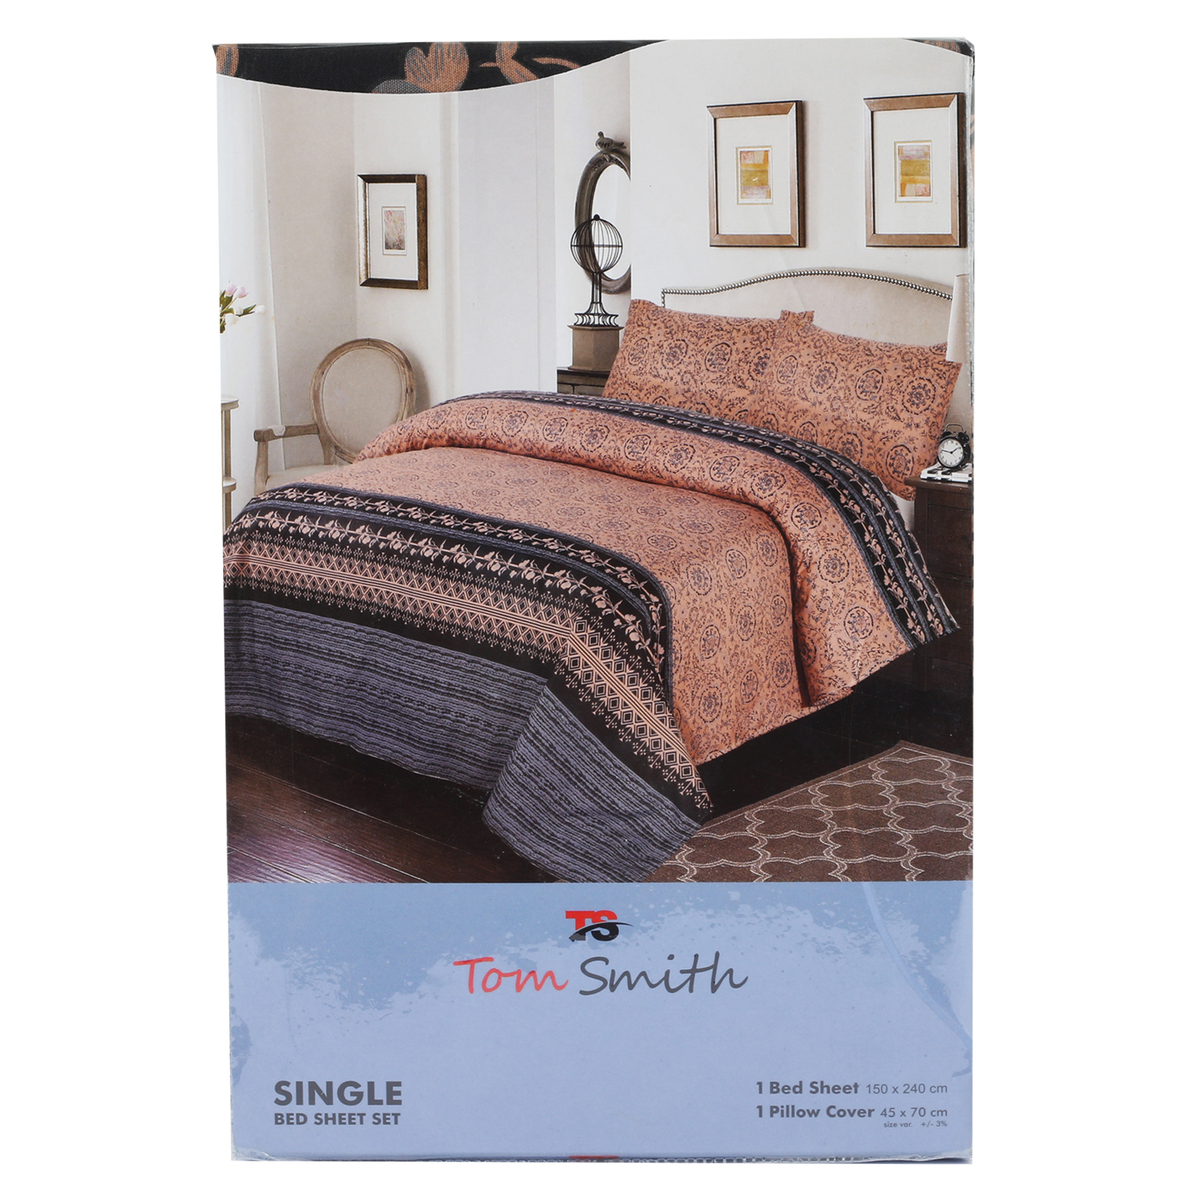 Tom Smith Bedsheet Single Set Assorted Designs